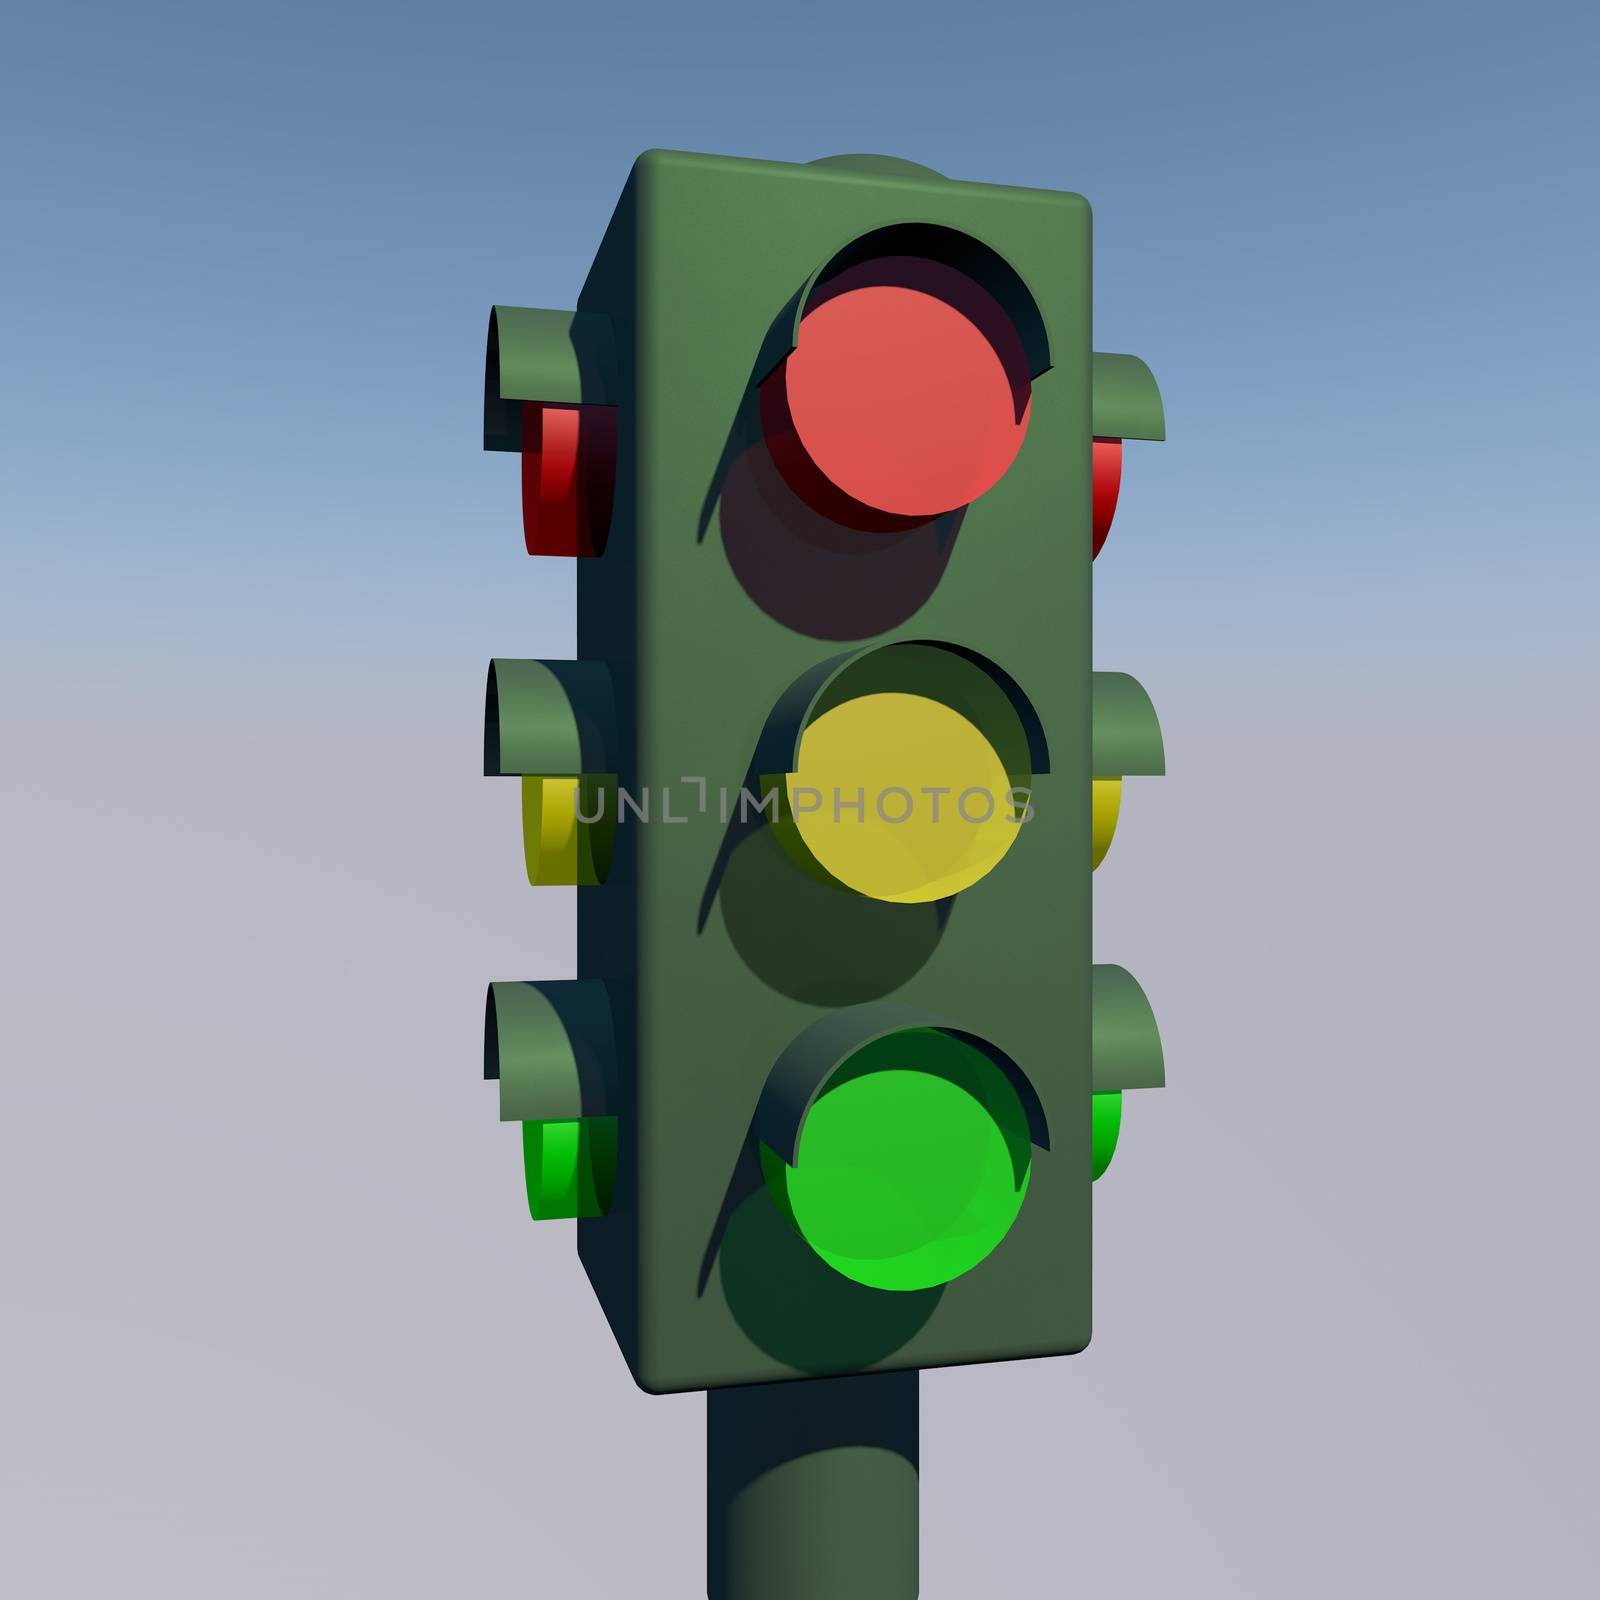 Traffic lights by Koufax73